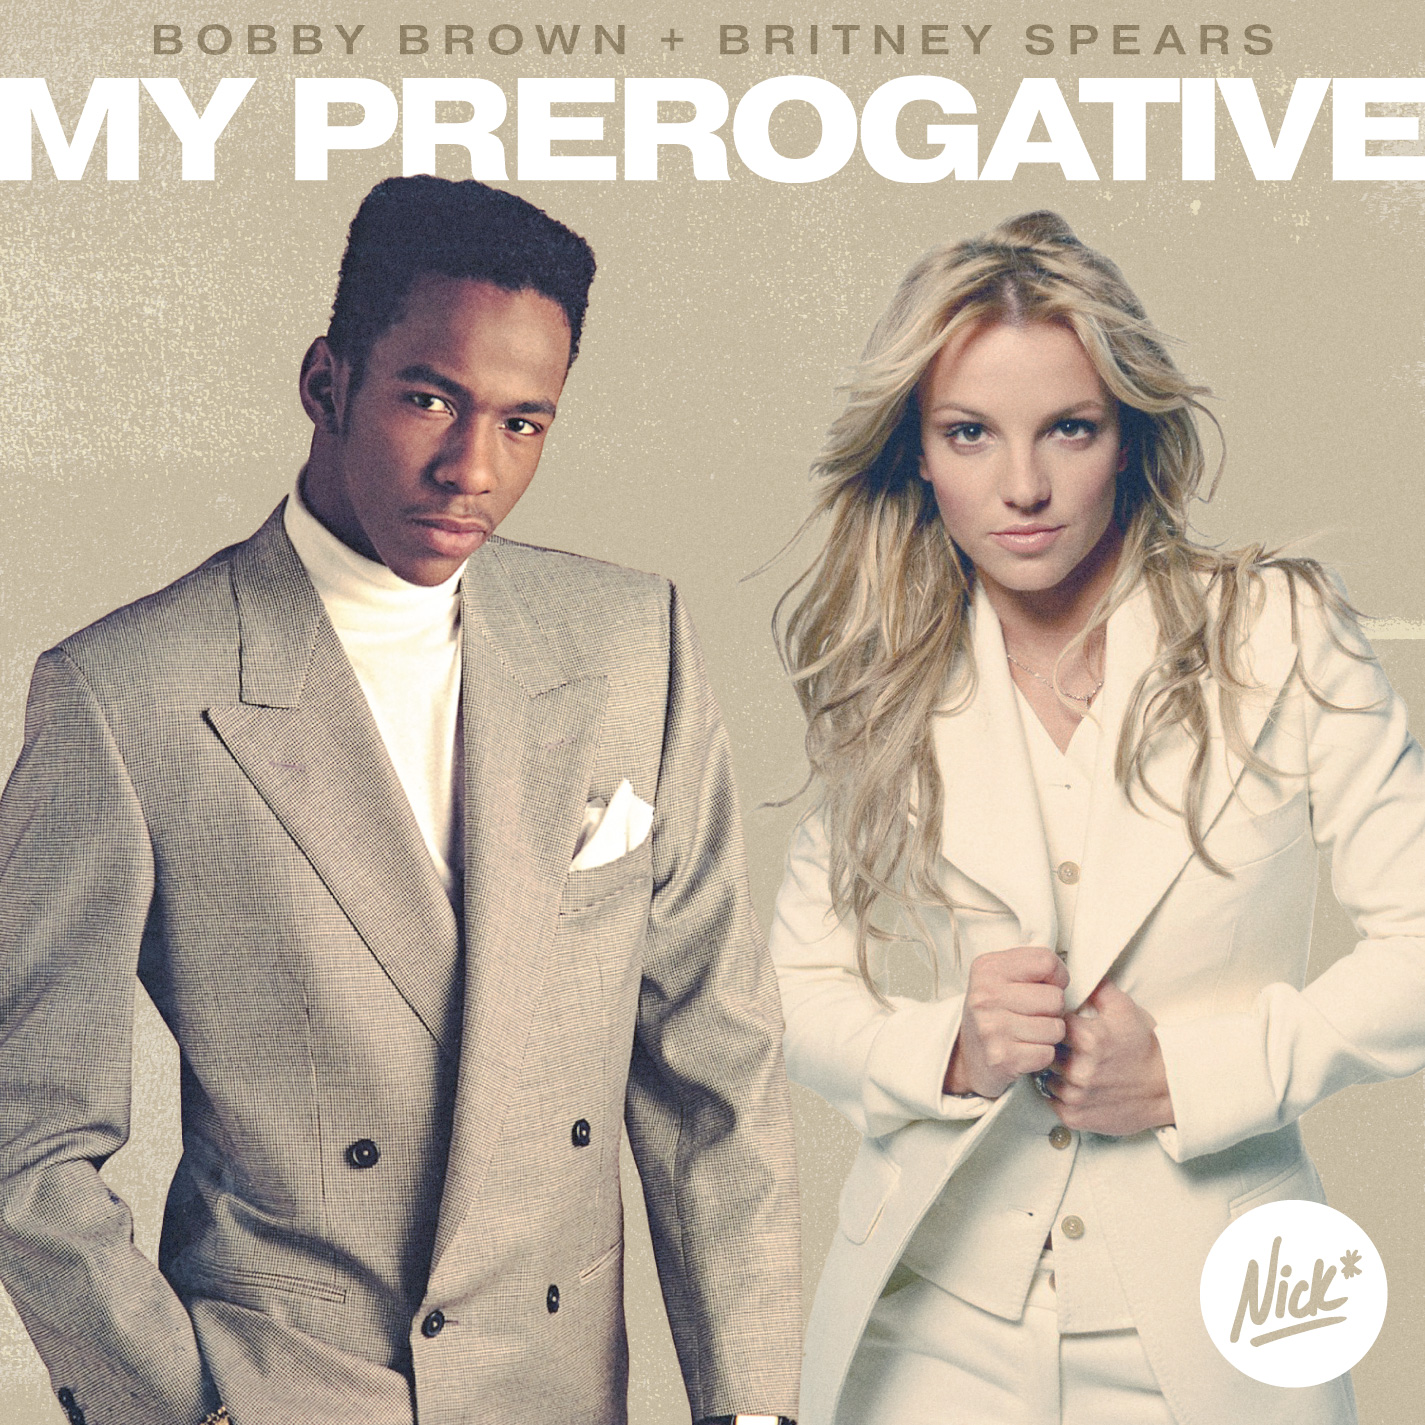 Bobby Brown + Britney Spears - My Prerogative Nick* Mashup